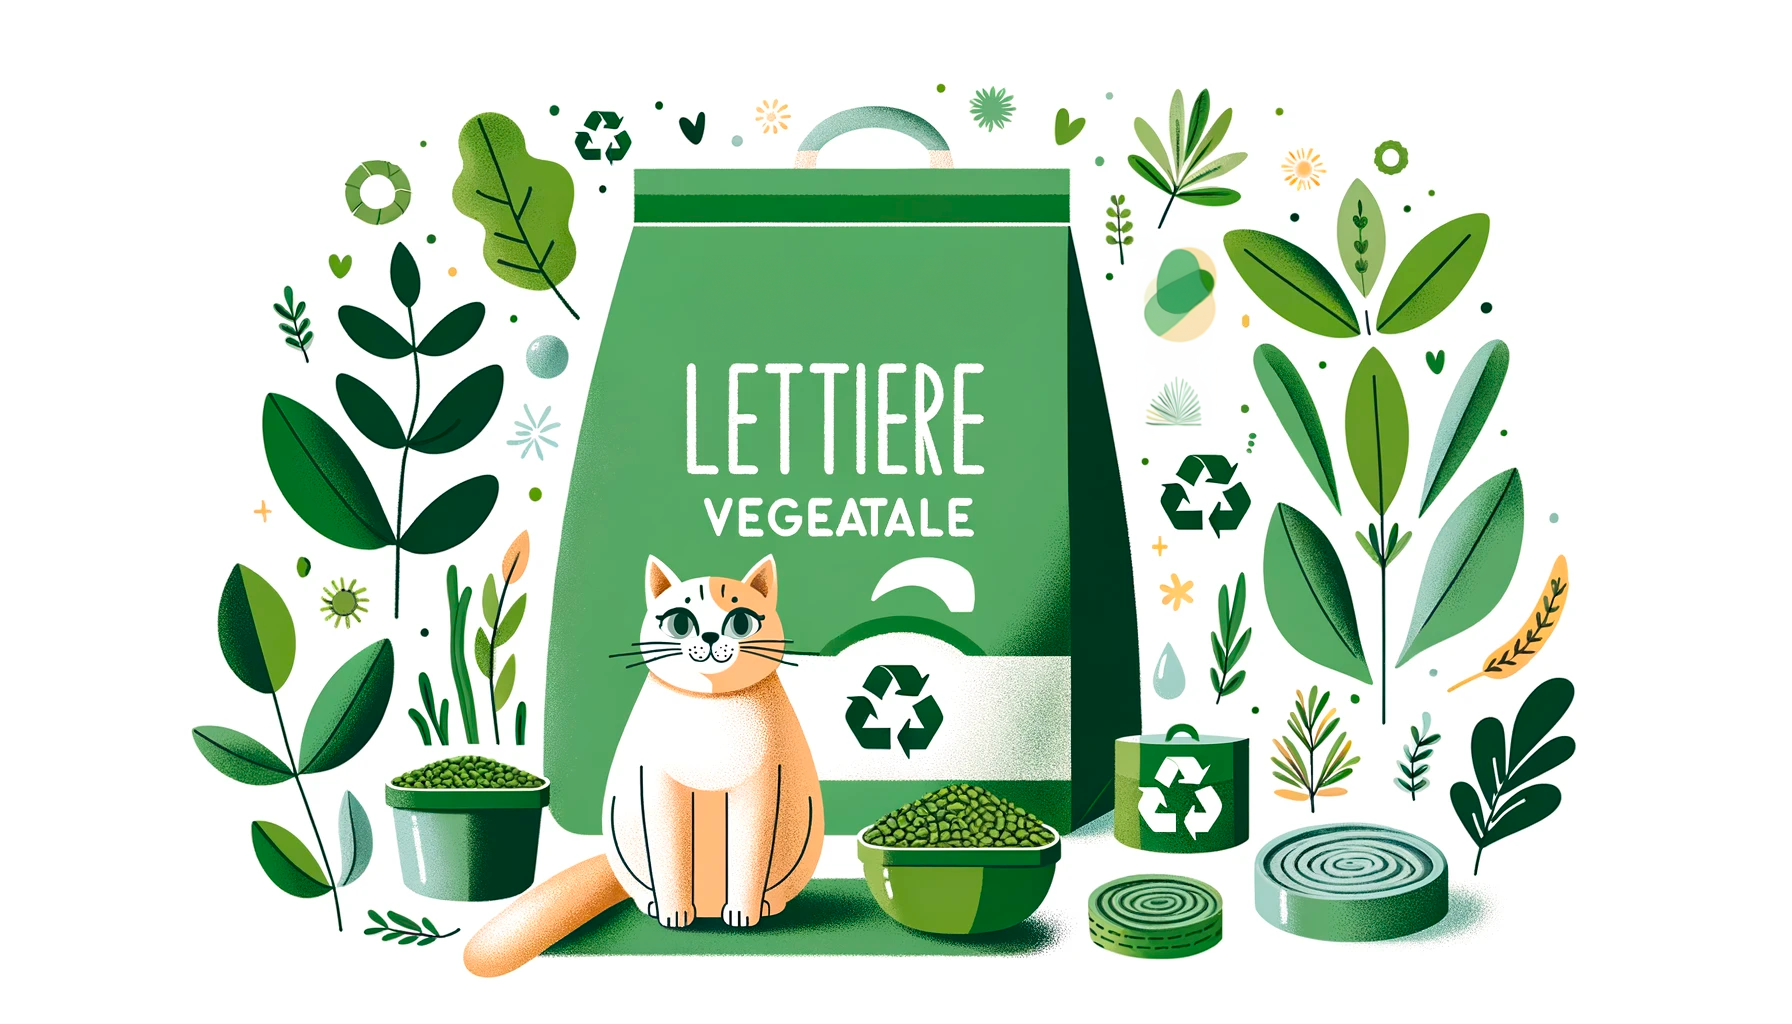 piuverde eco friendly cat litter sustainability